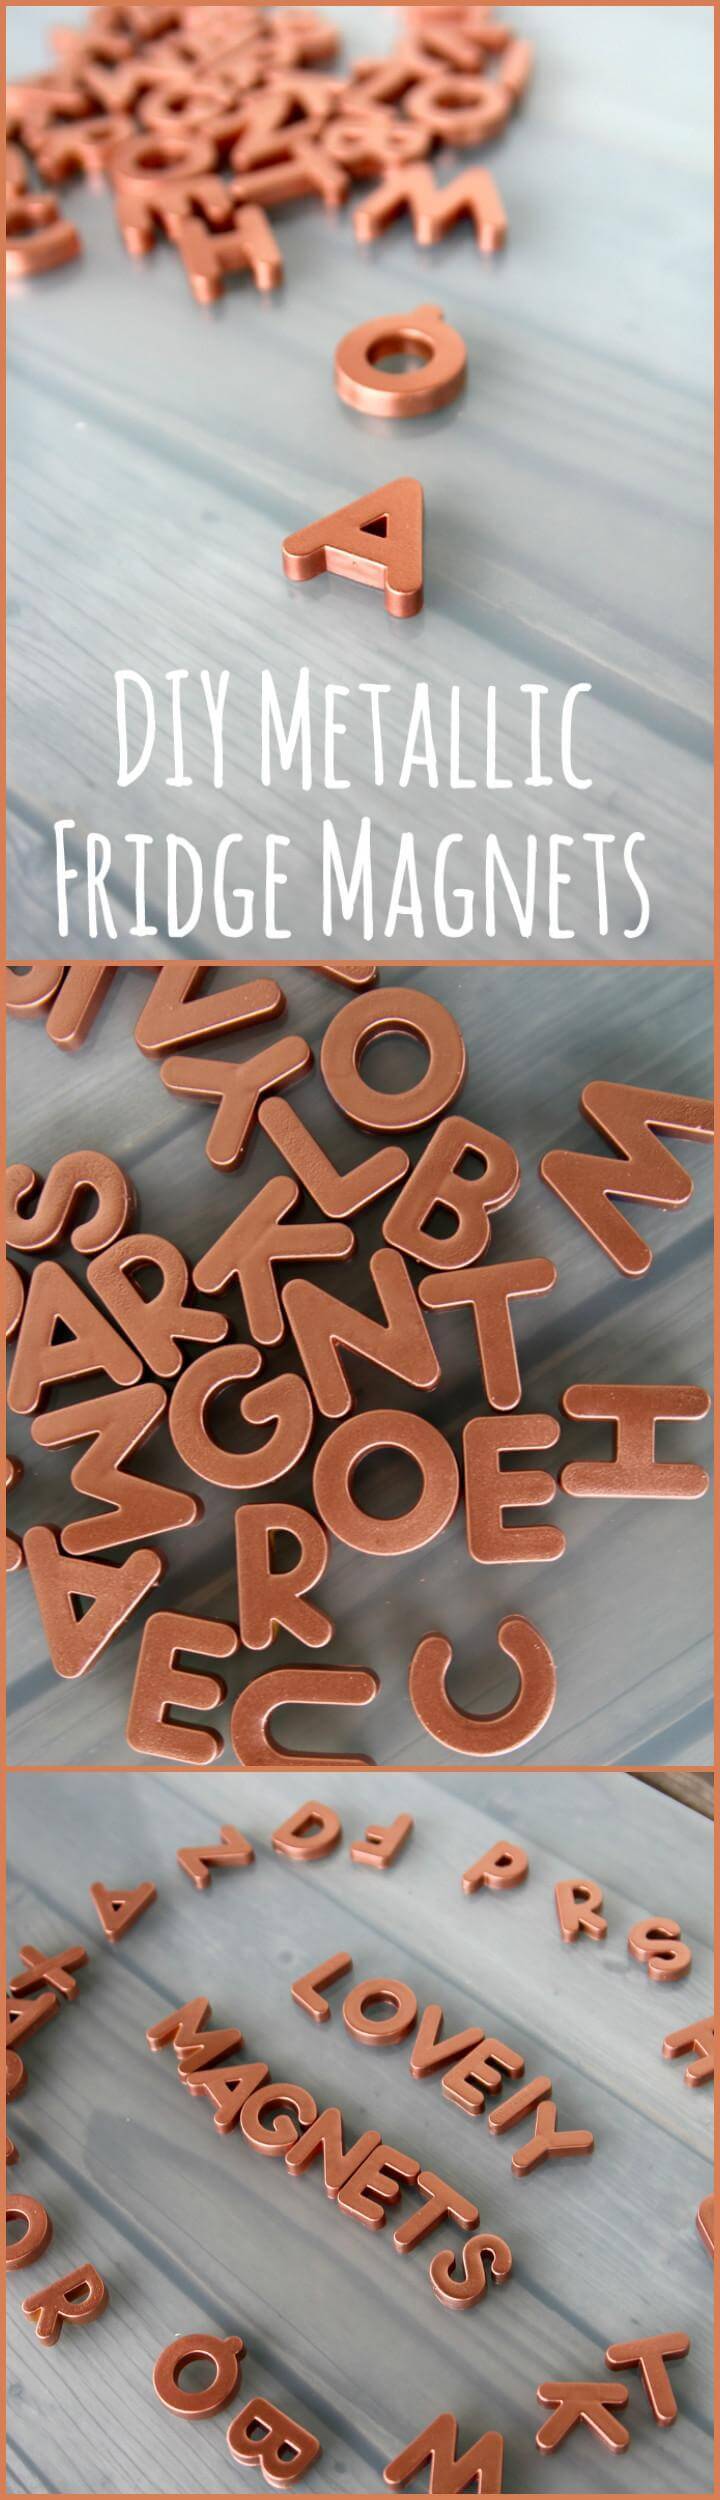 DIY easy metallic fridge magnets